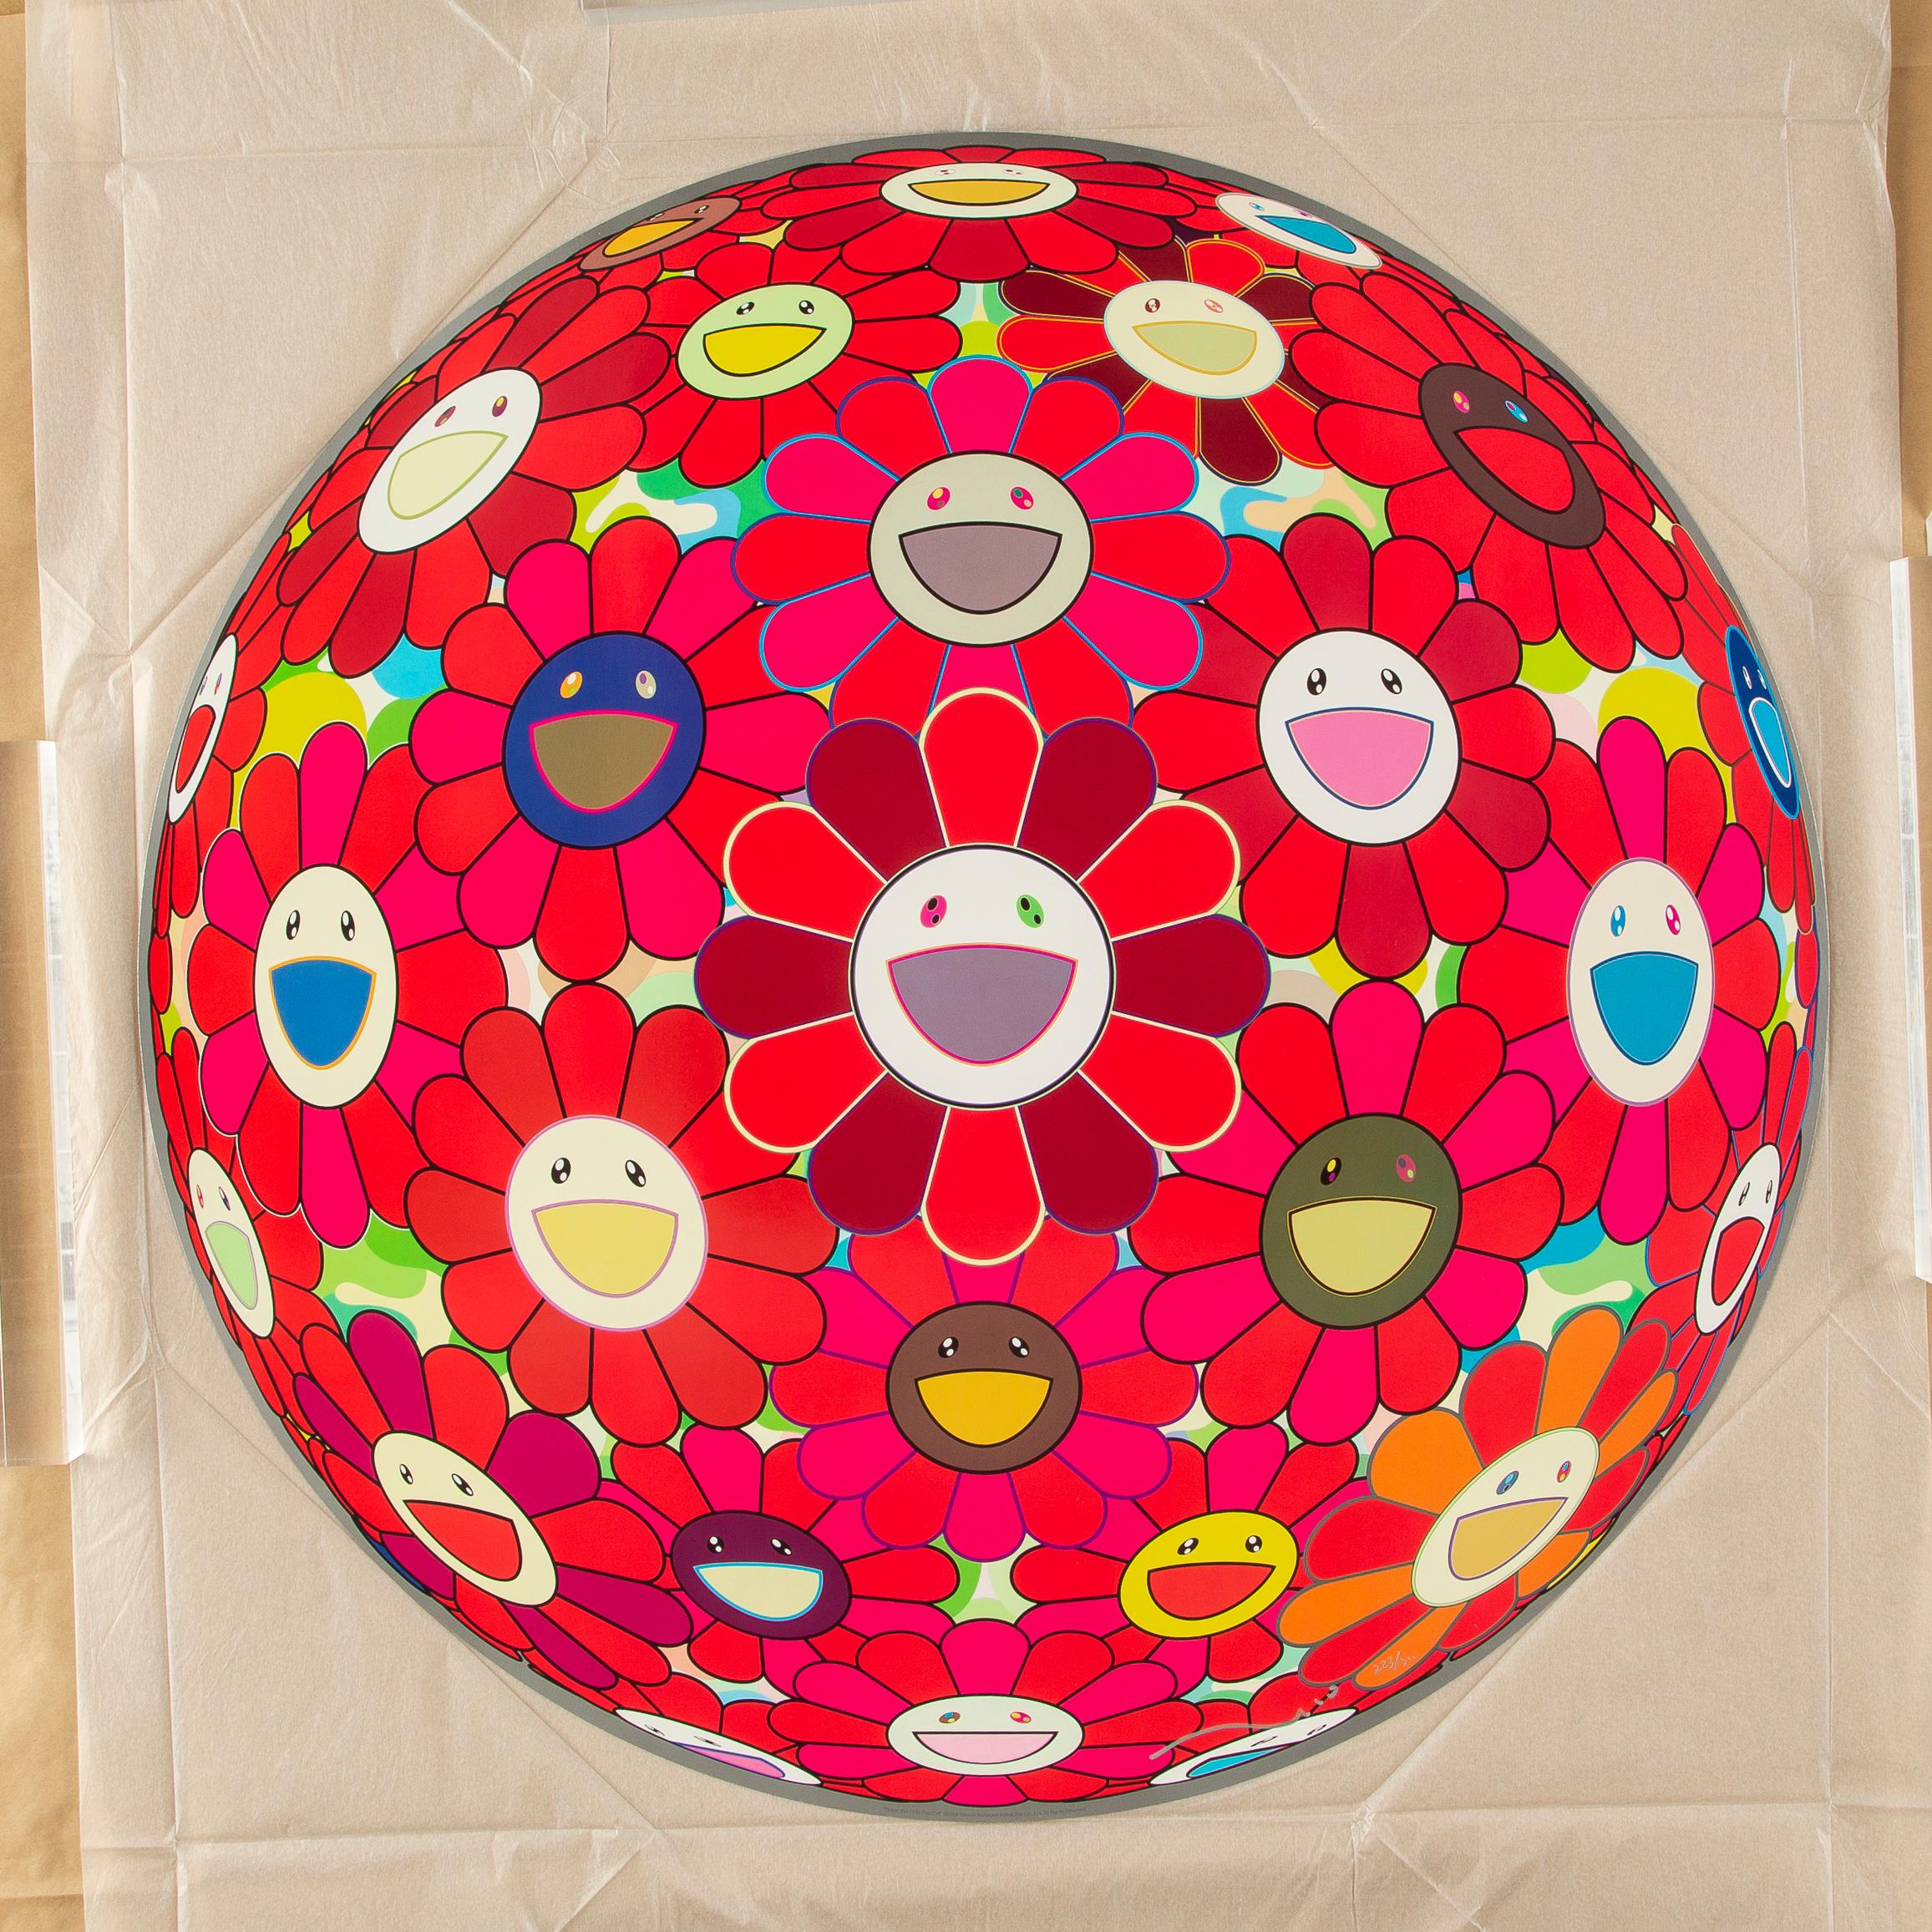 Ball à fleurs (3D) Red Cliff édition limitée (impression) de Murakami signée, numérotée - Print de Takashi Murakami